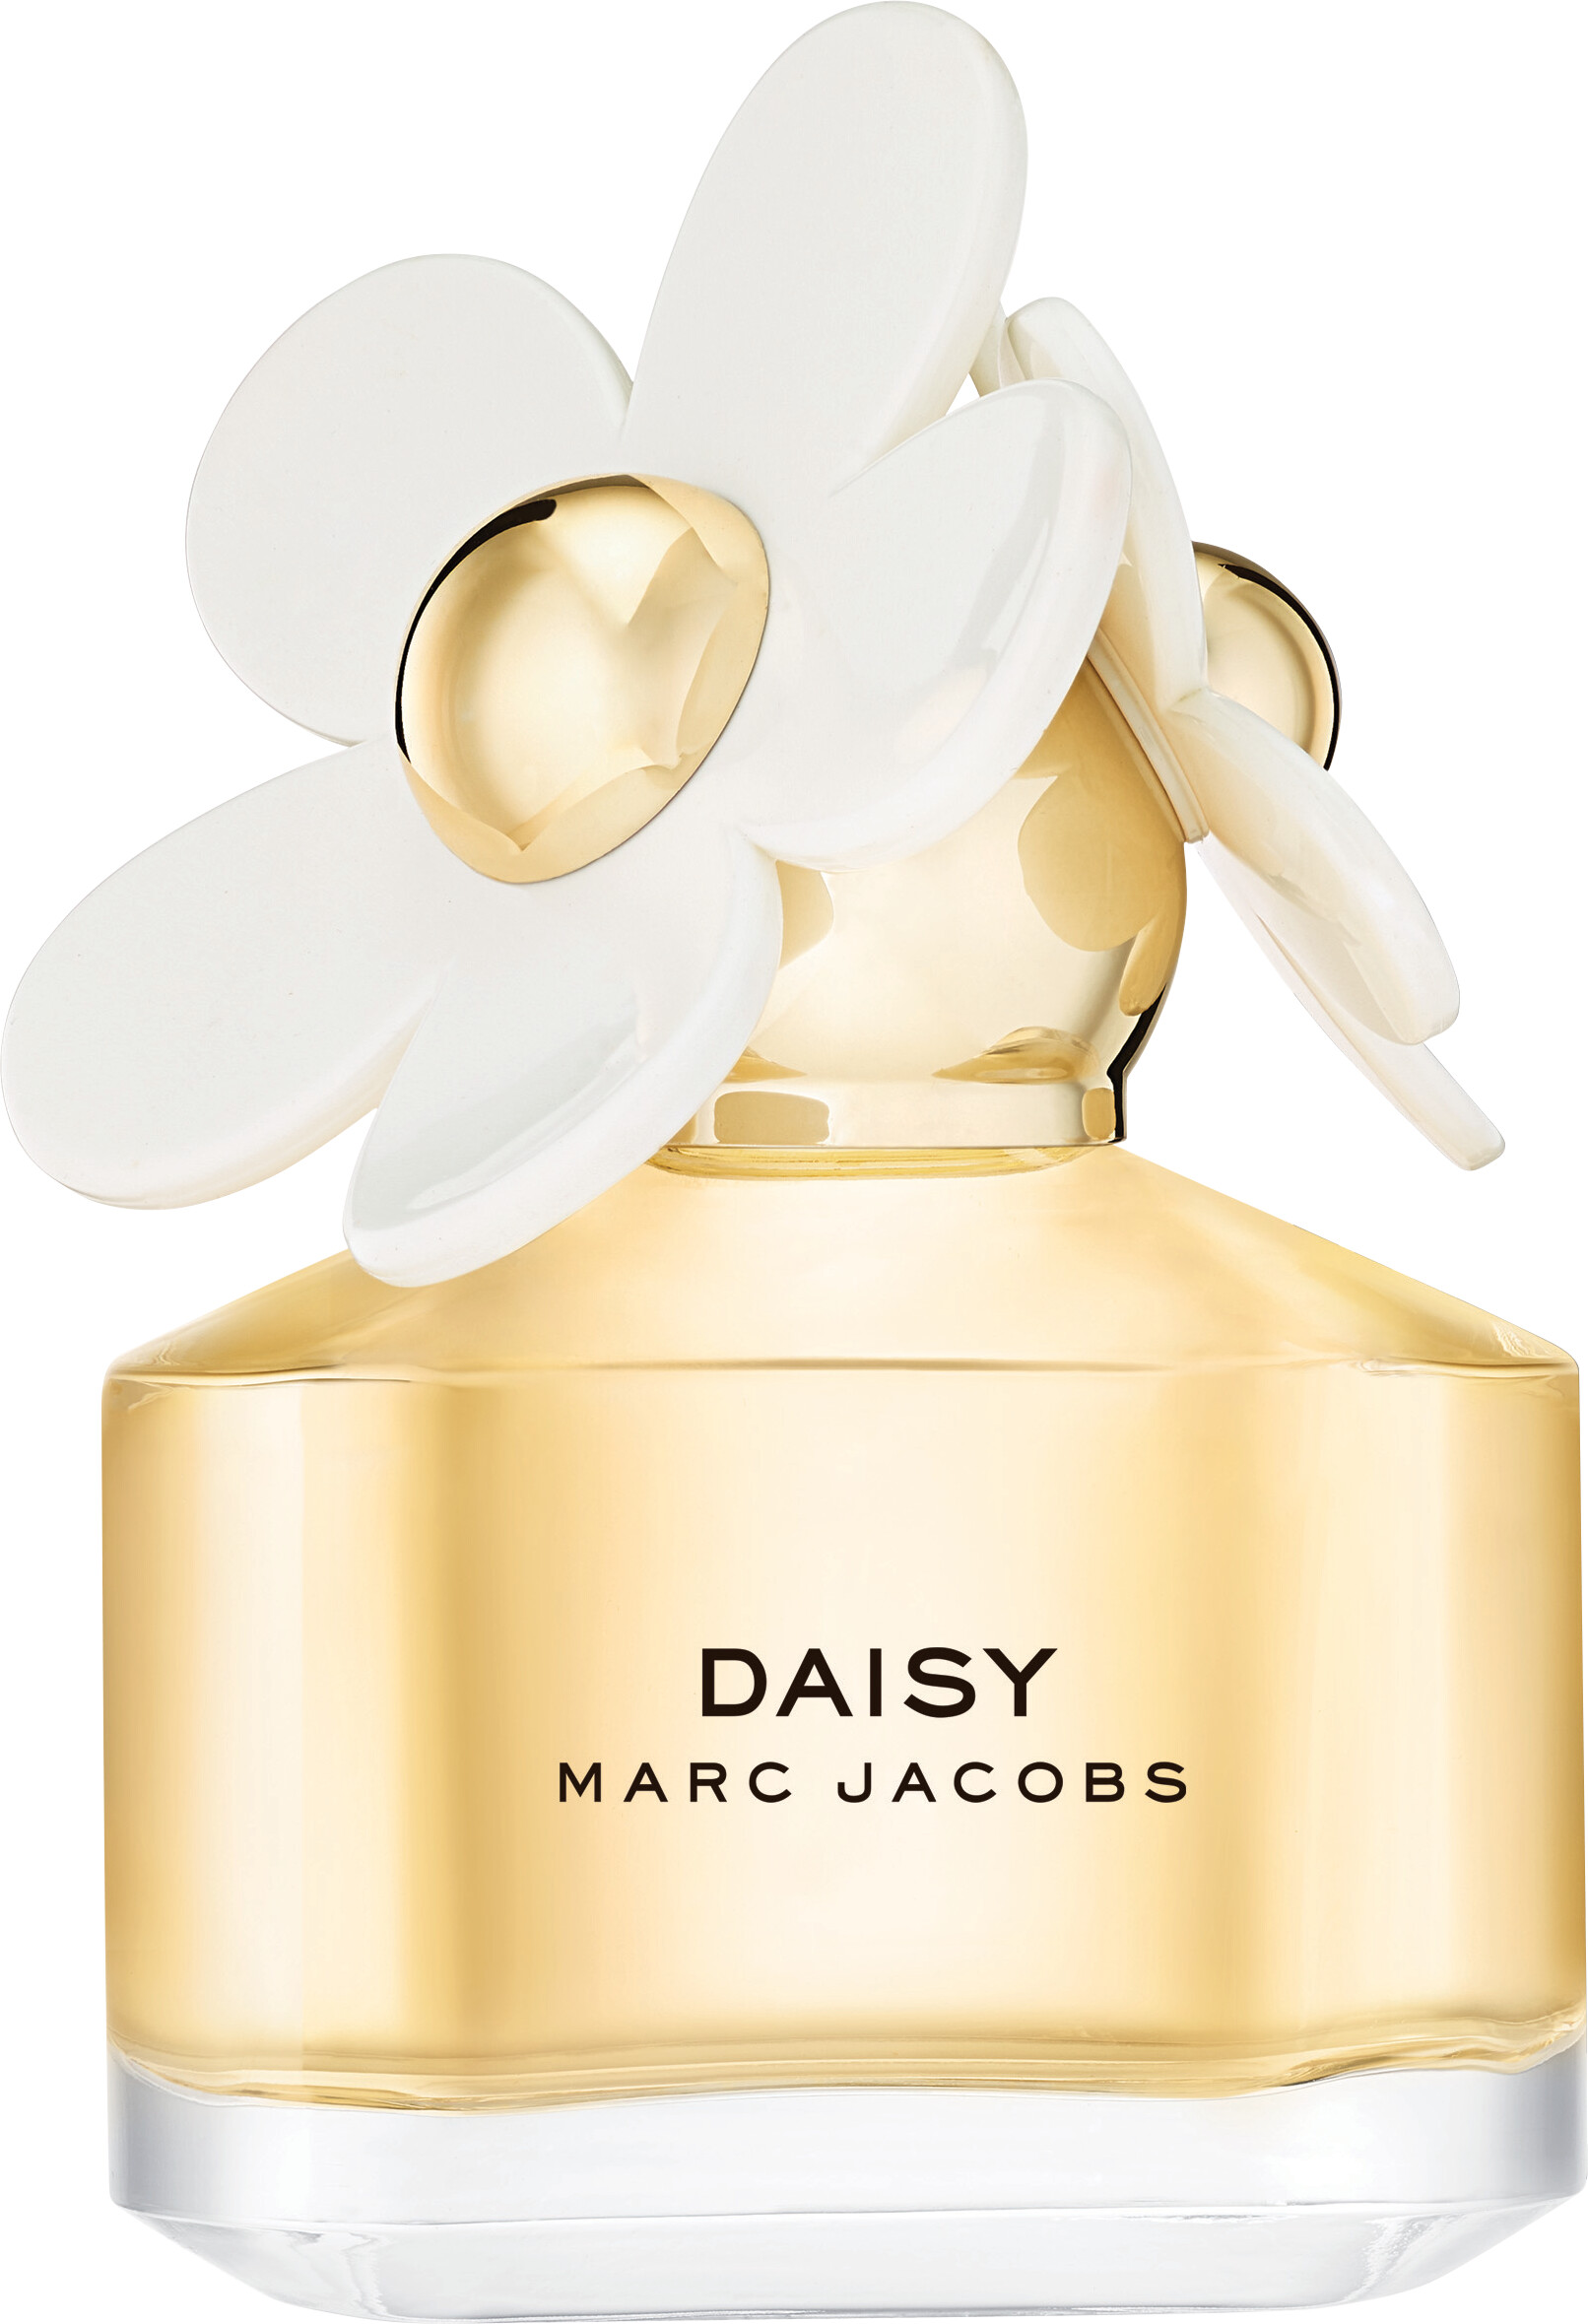 Marc Jacobs Daisy Eau de Toilette Spray 50ml